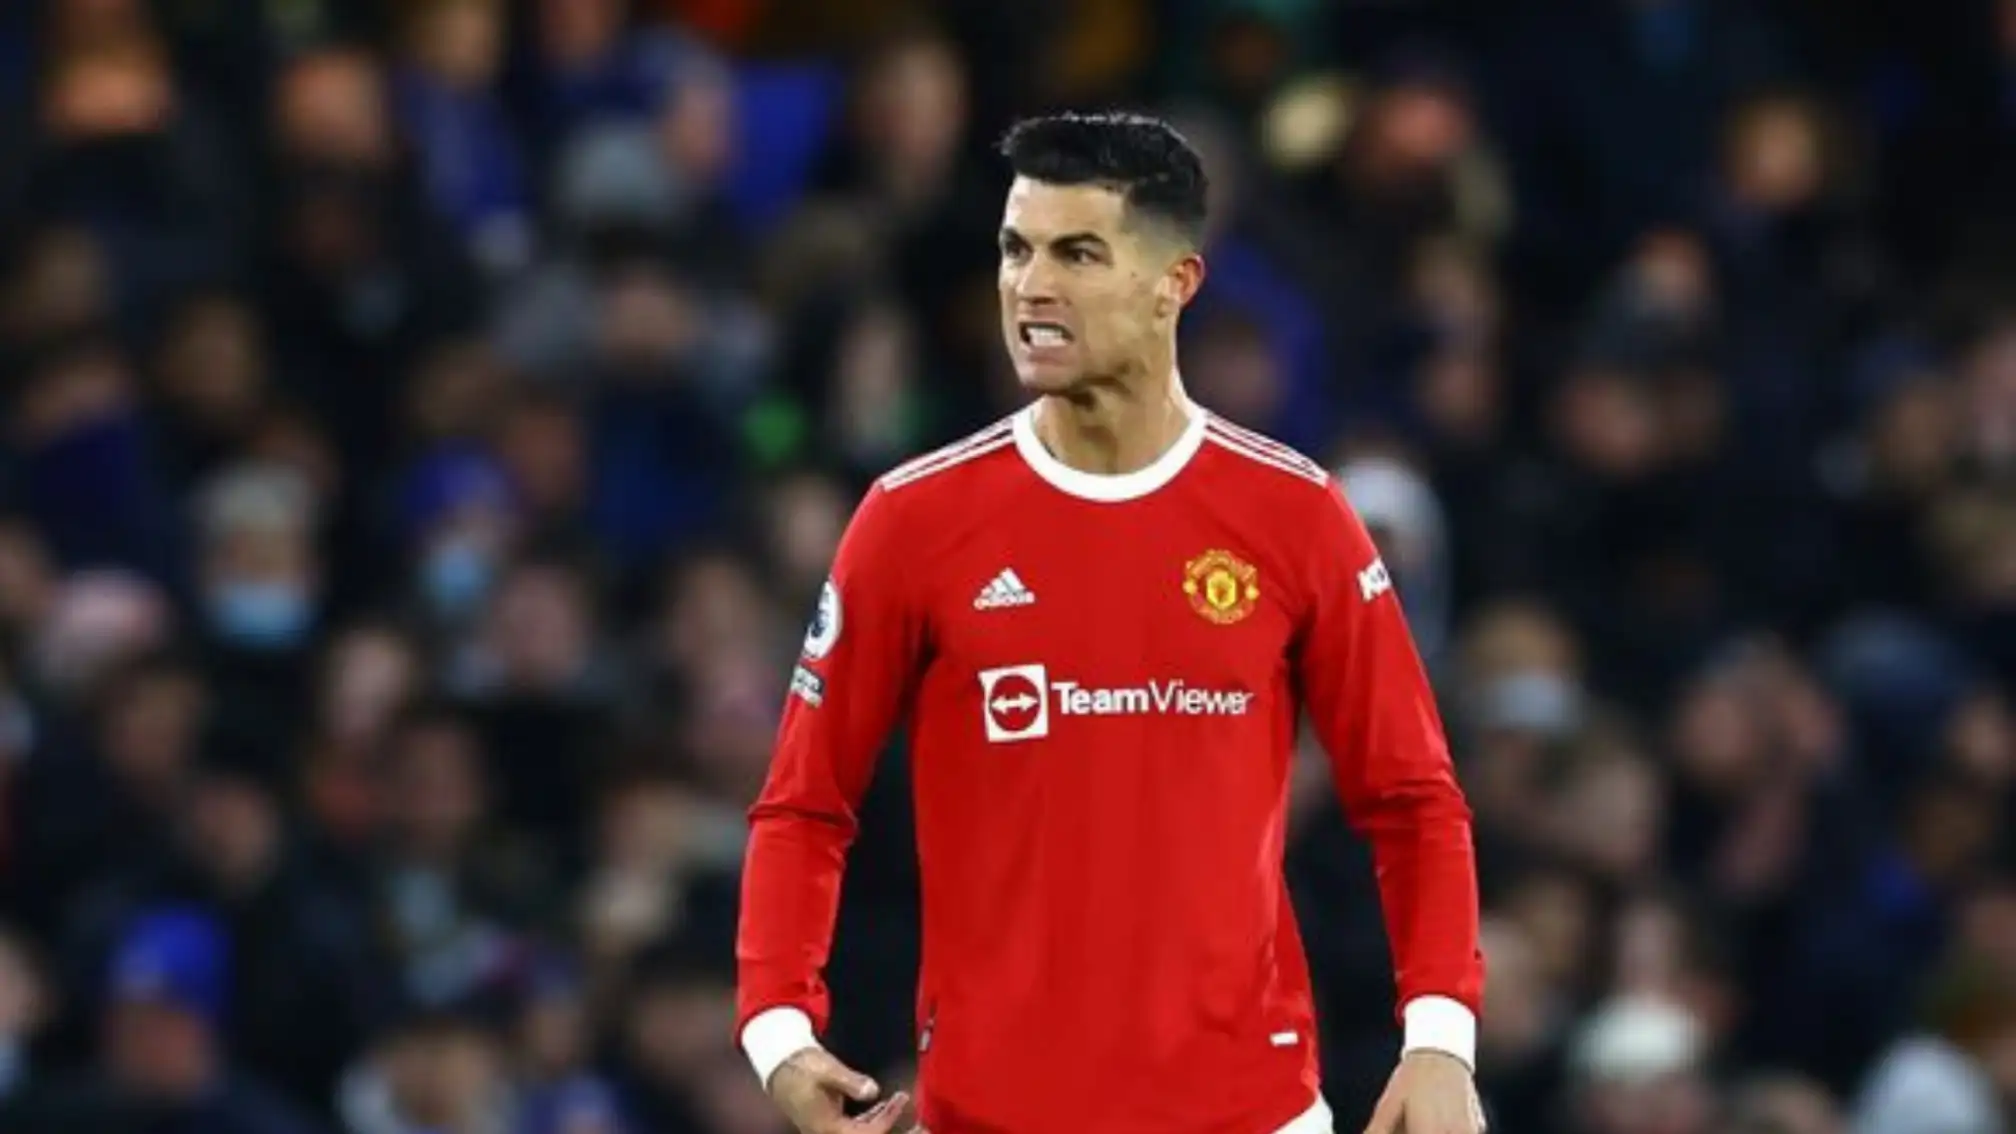 Paul Merson to Erik ten Hag: Get rid of Cristiano Ronaldo